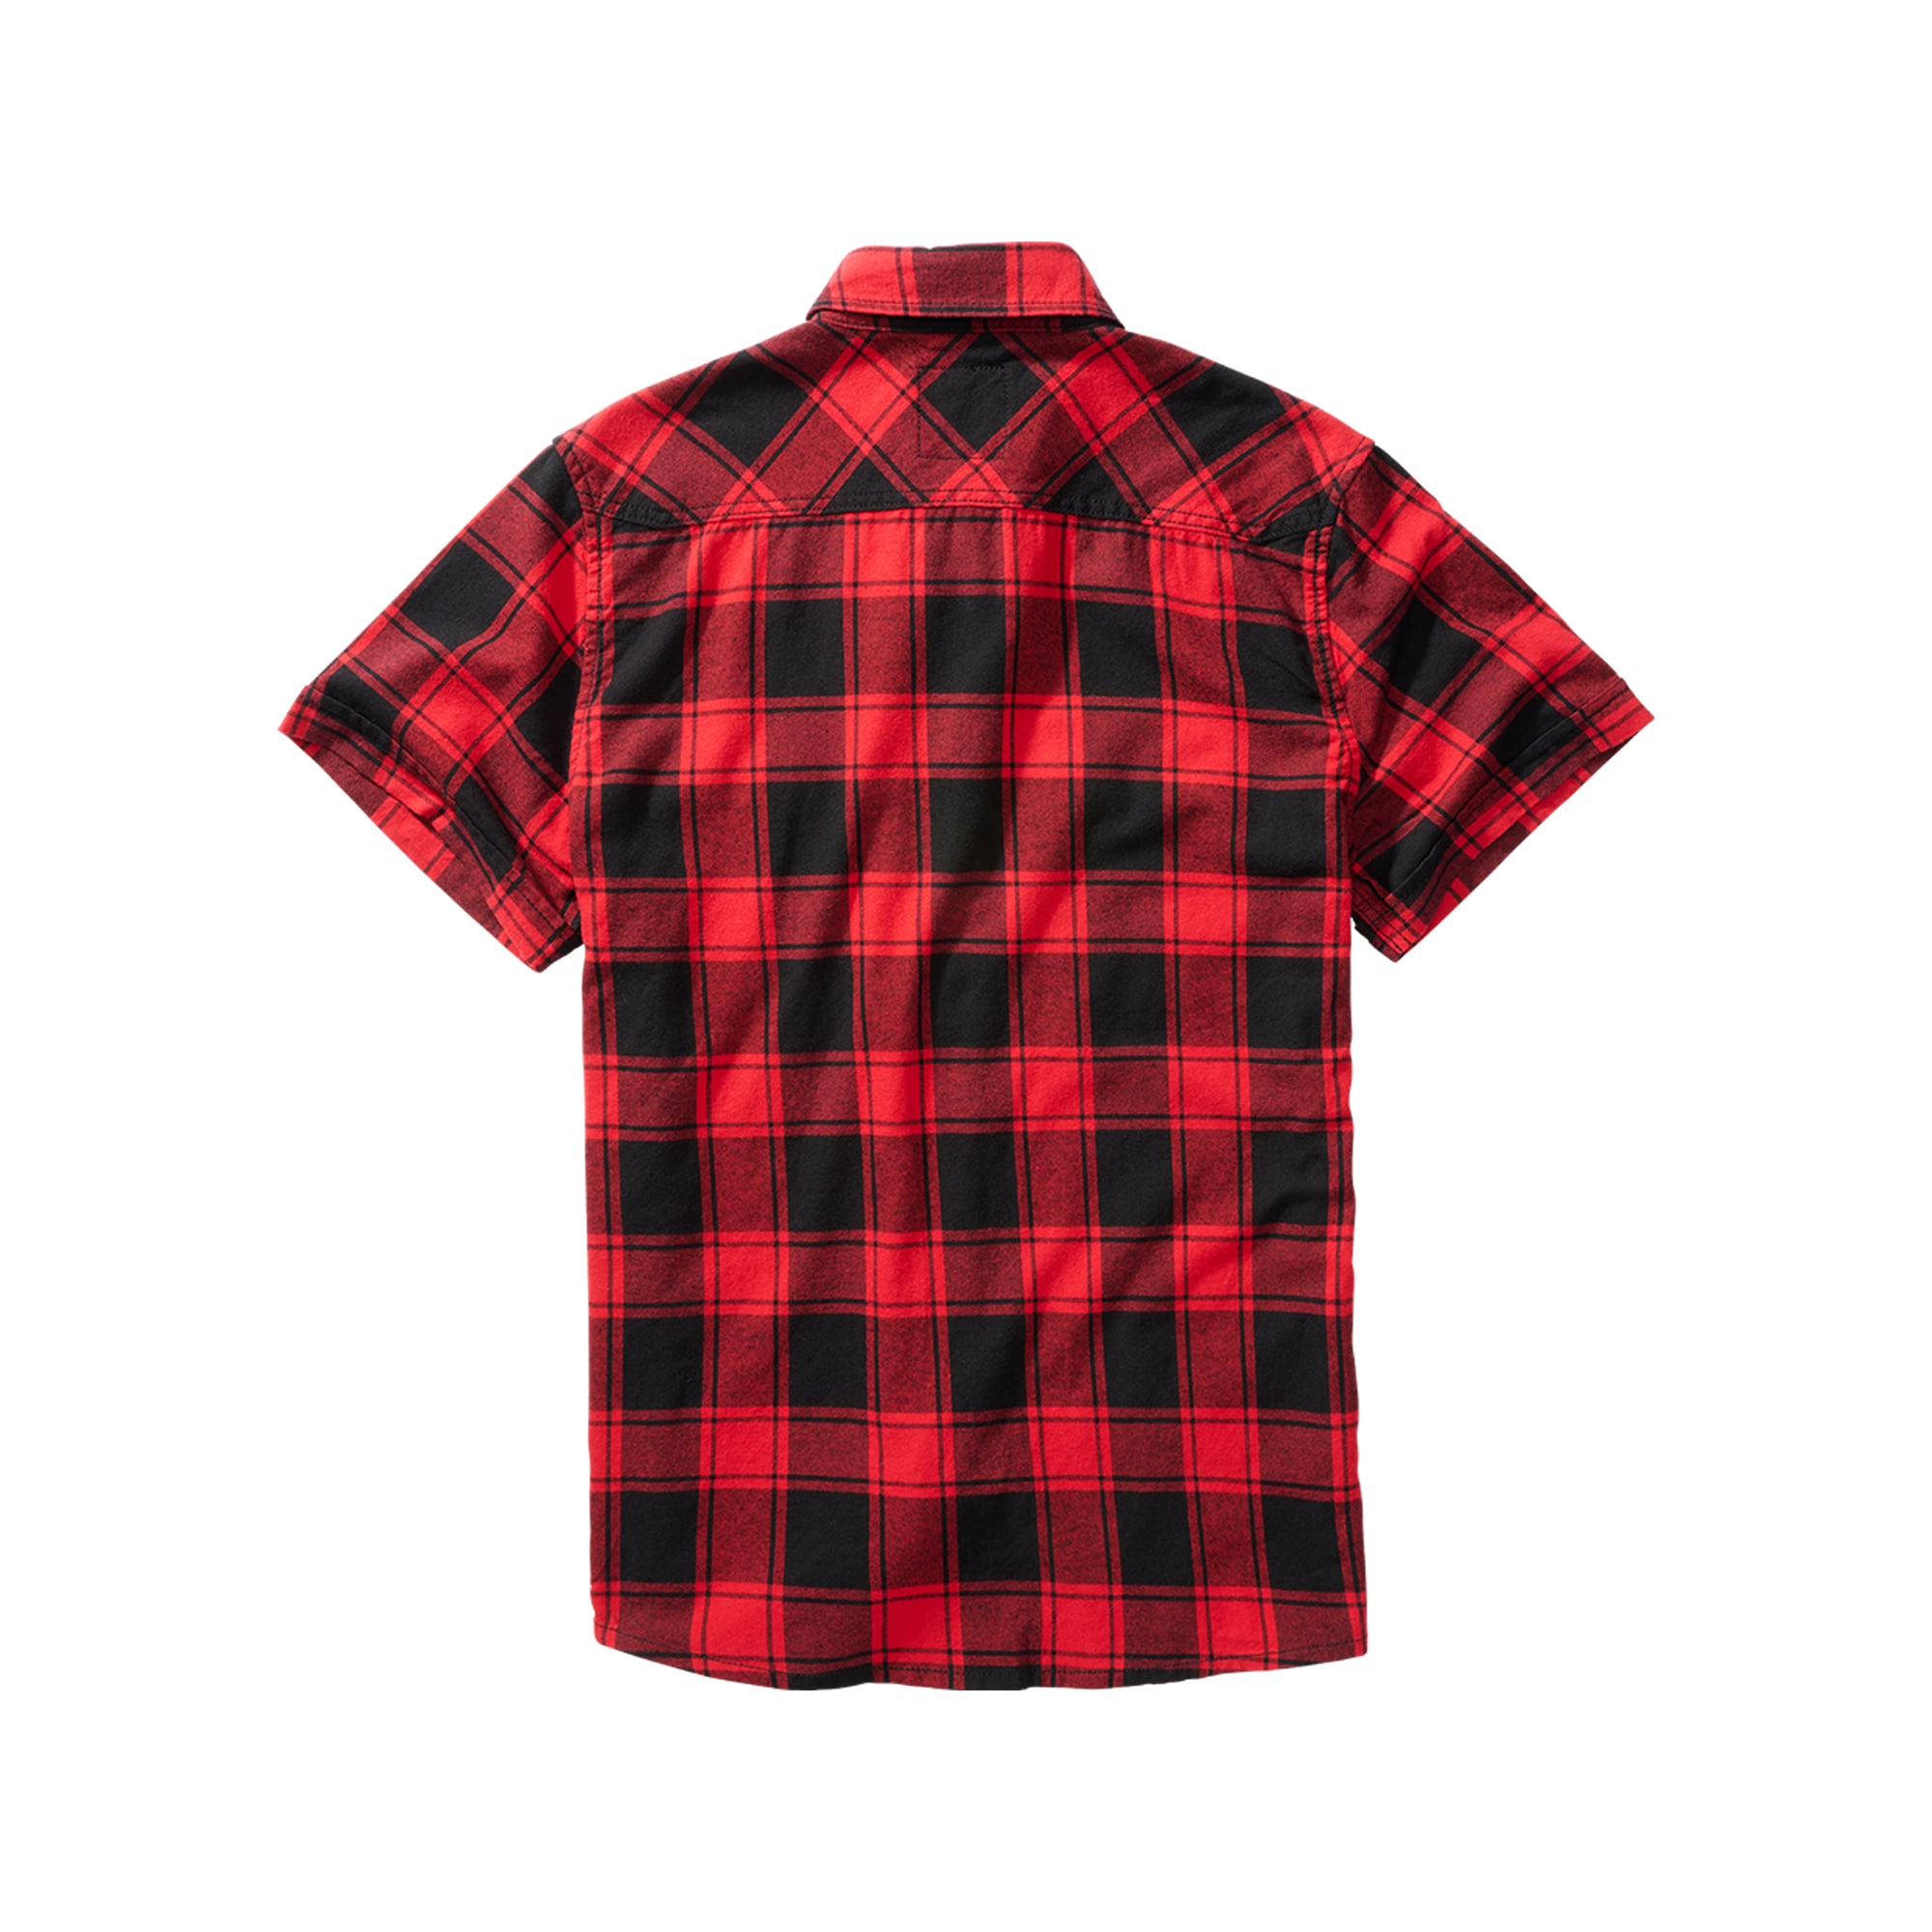 ASMC the Brandit Half Shirt Check by Purchase Sleeve red/black